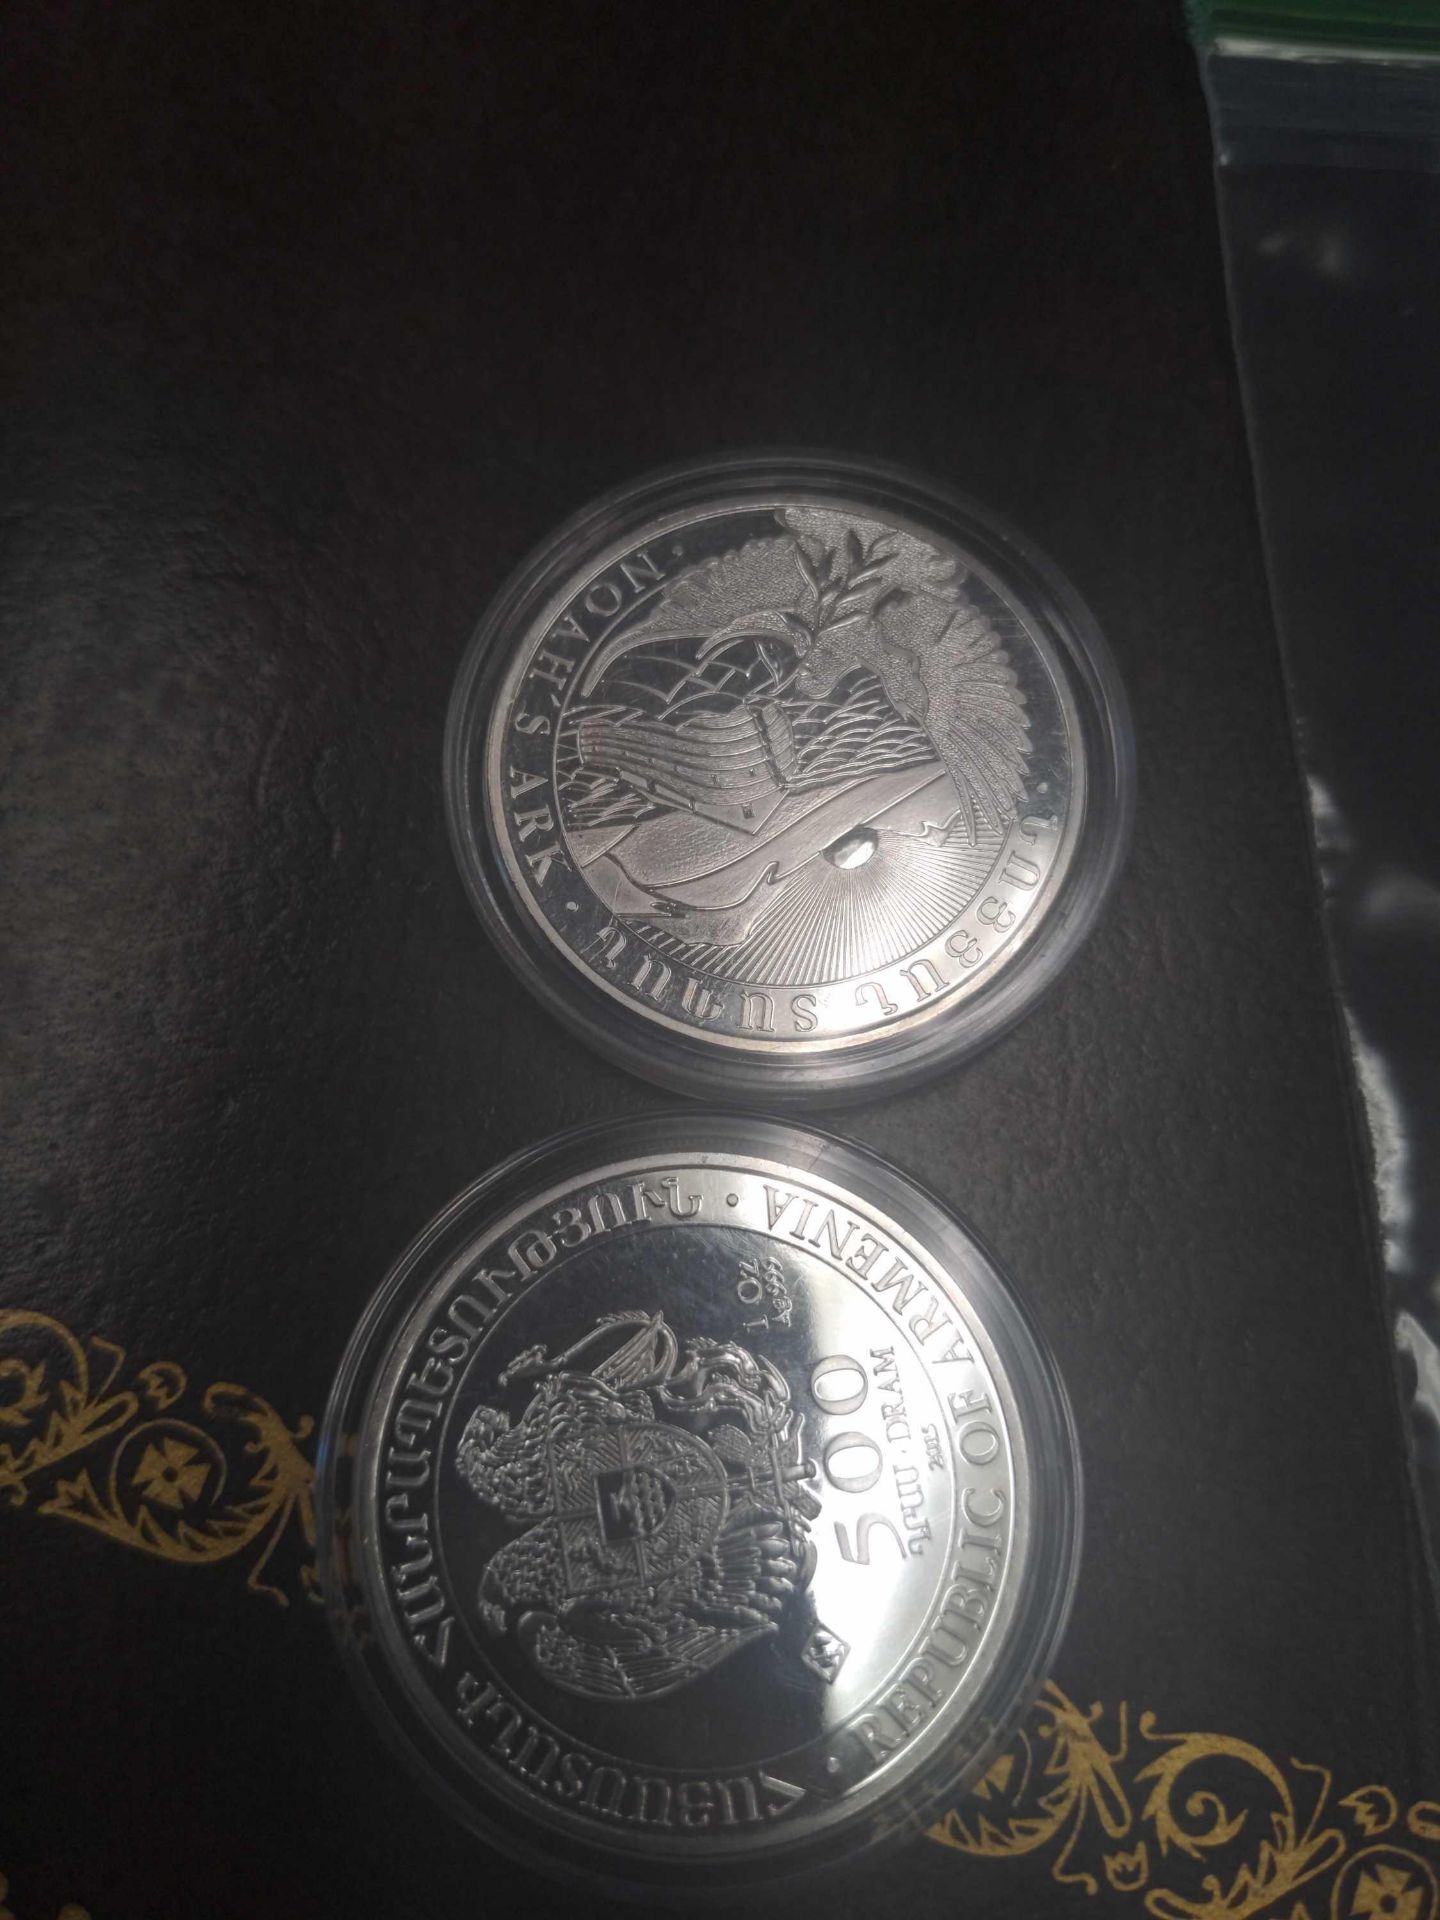 2 Armenian Noahs Arc Coins - Image 5 of 5